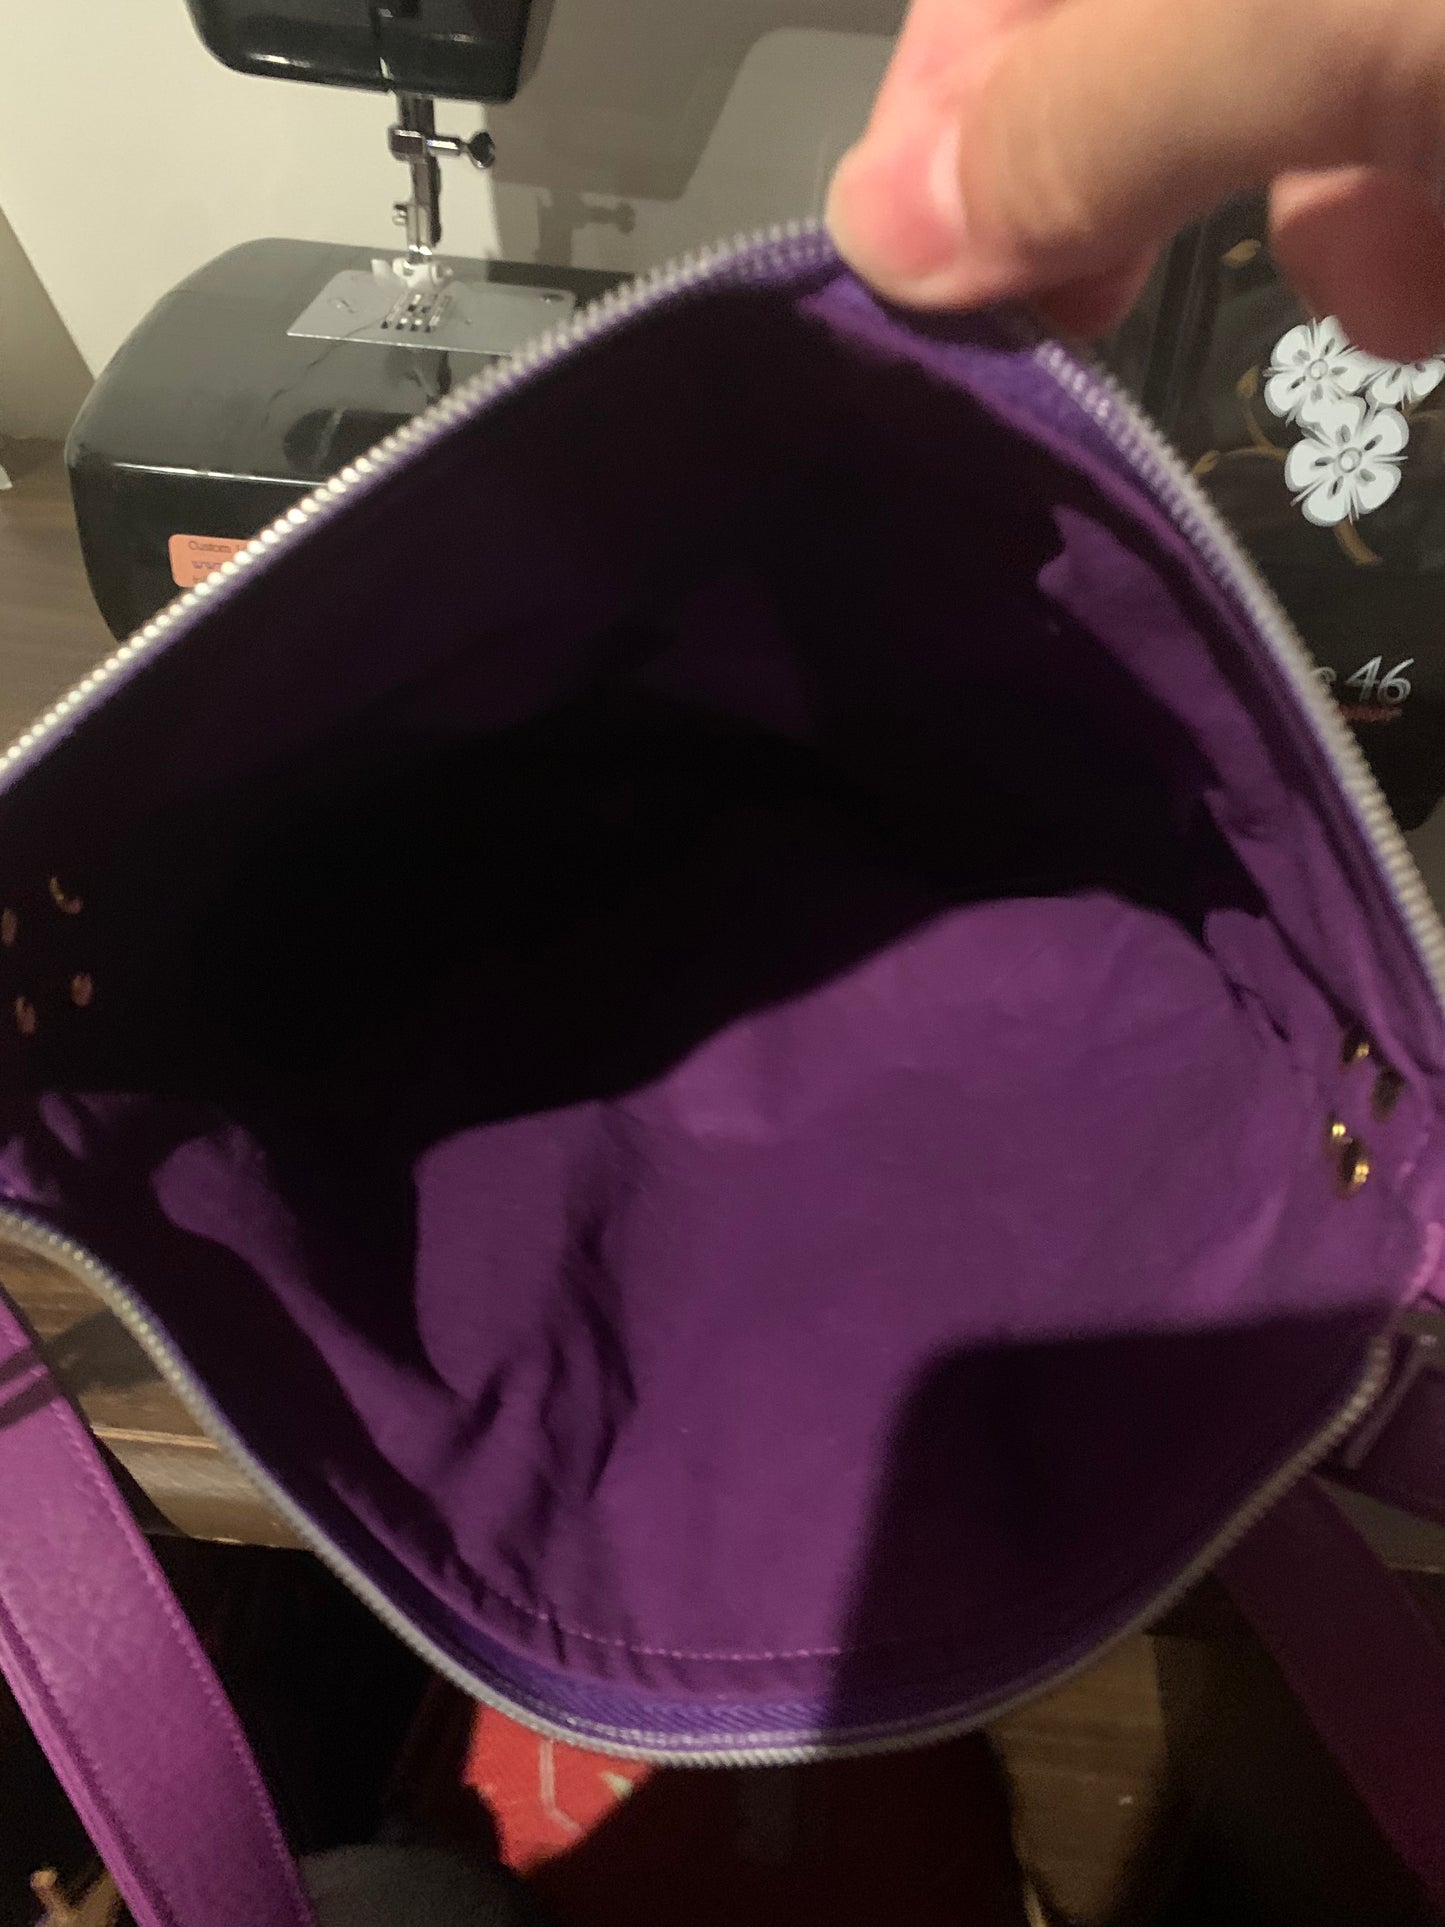 Purple crossbody bag